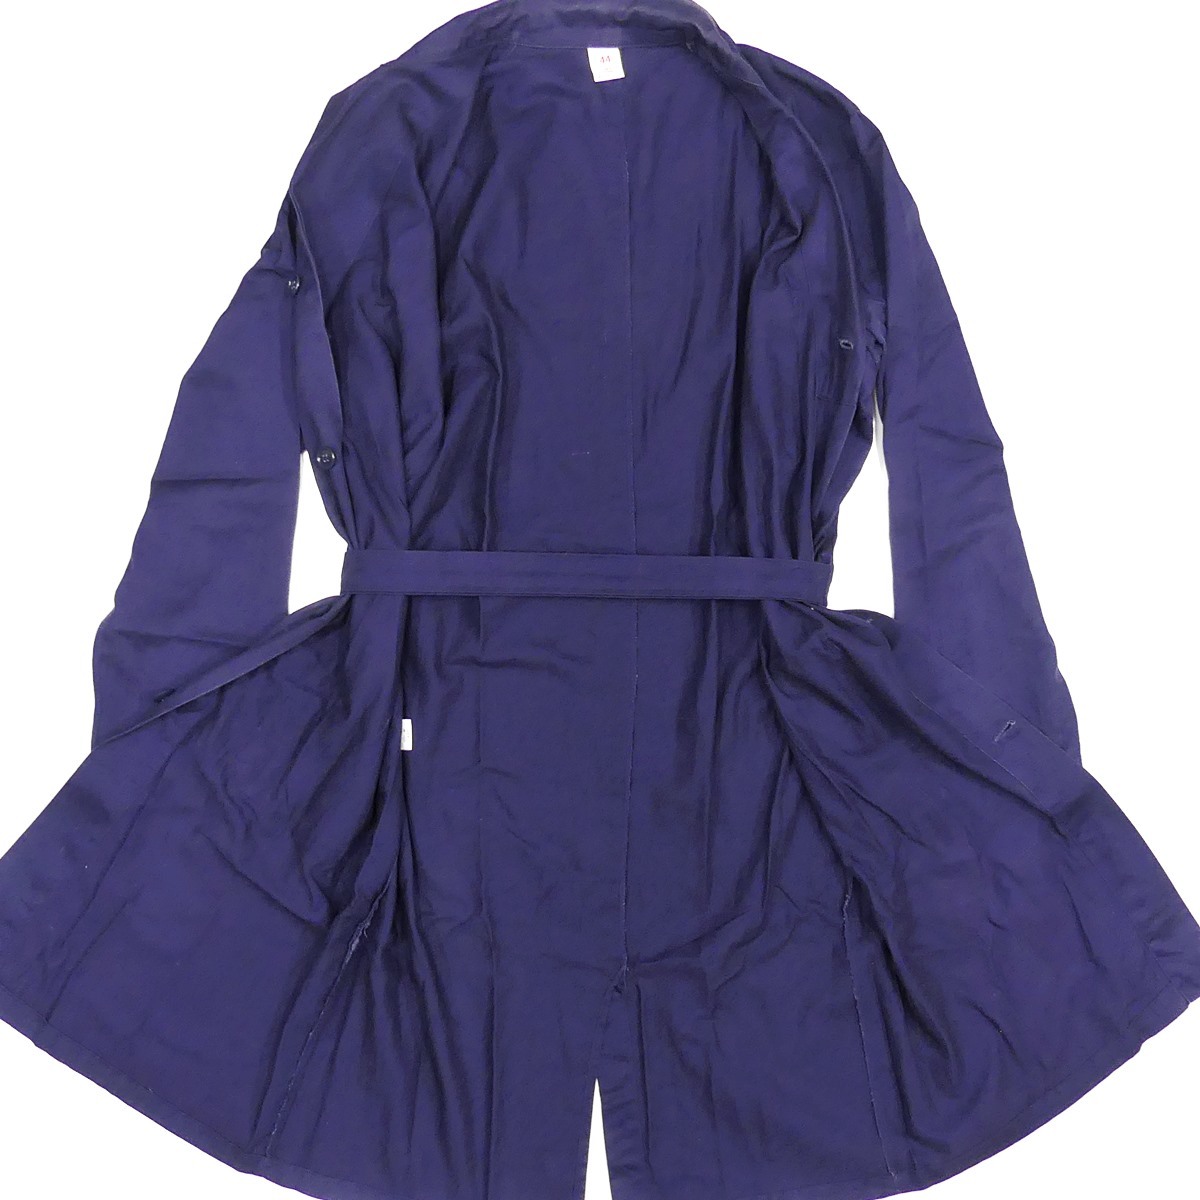  prompt decision * Italy made INDUSTRIAL DESIGN* men's S rank trench coat in dust real design 44 shop coat navy blue navy long coat 